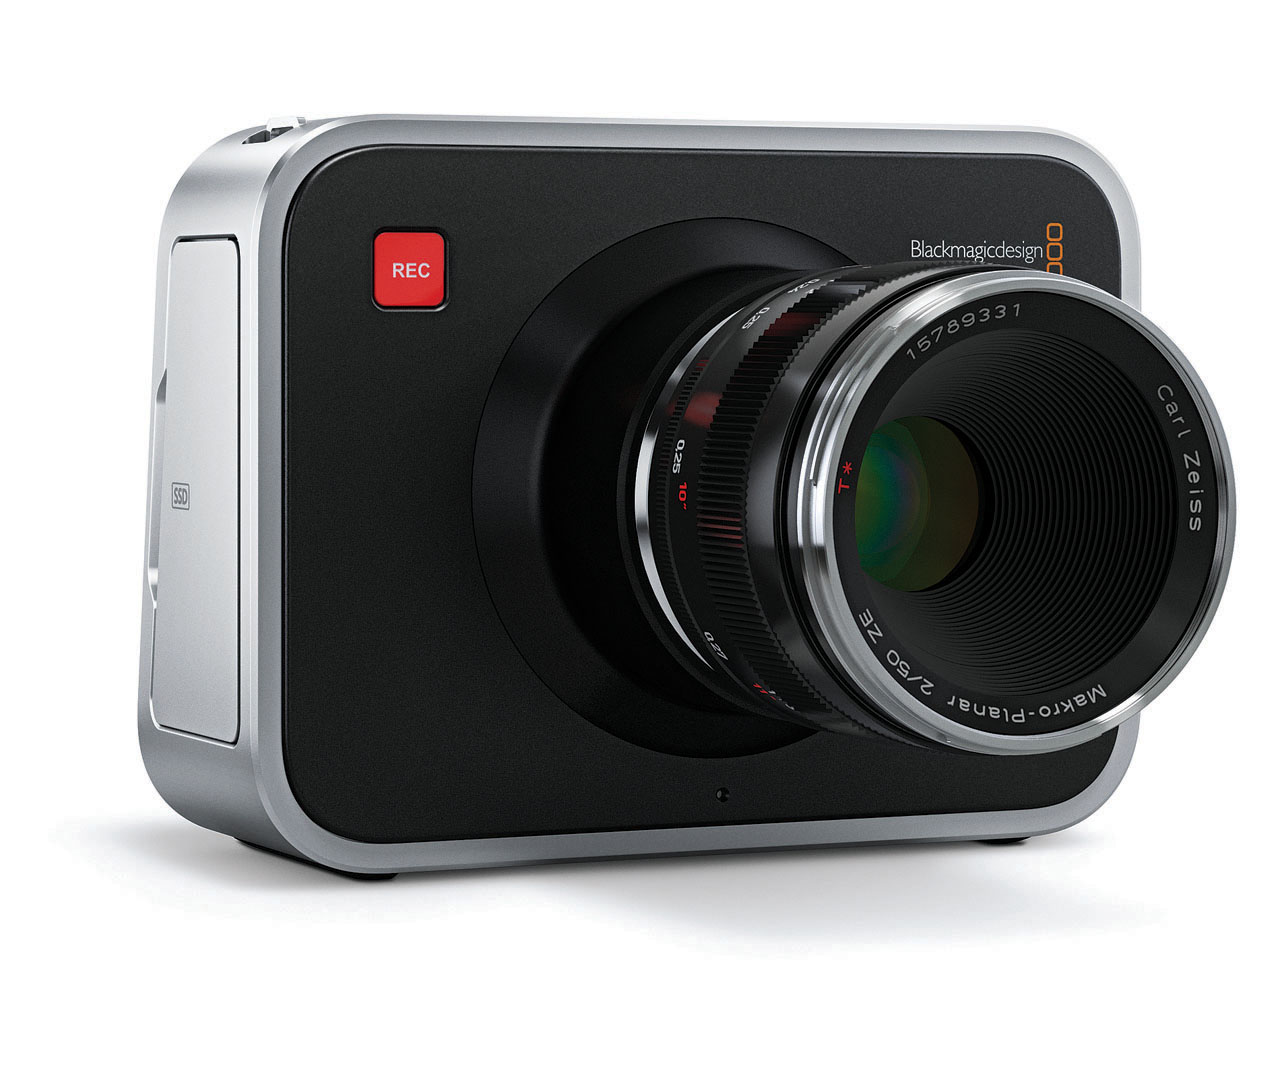 Blackmagic Design Cinema Camera available for preorder